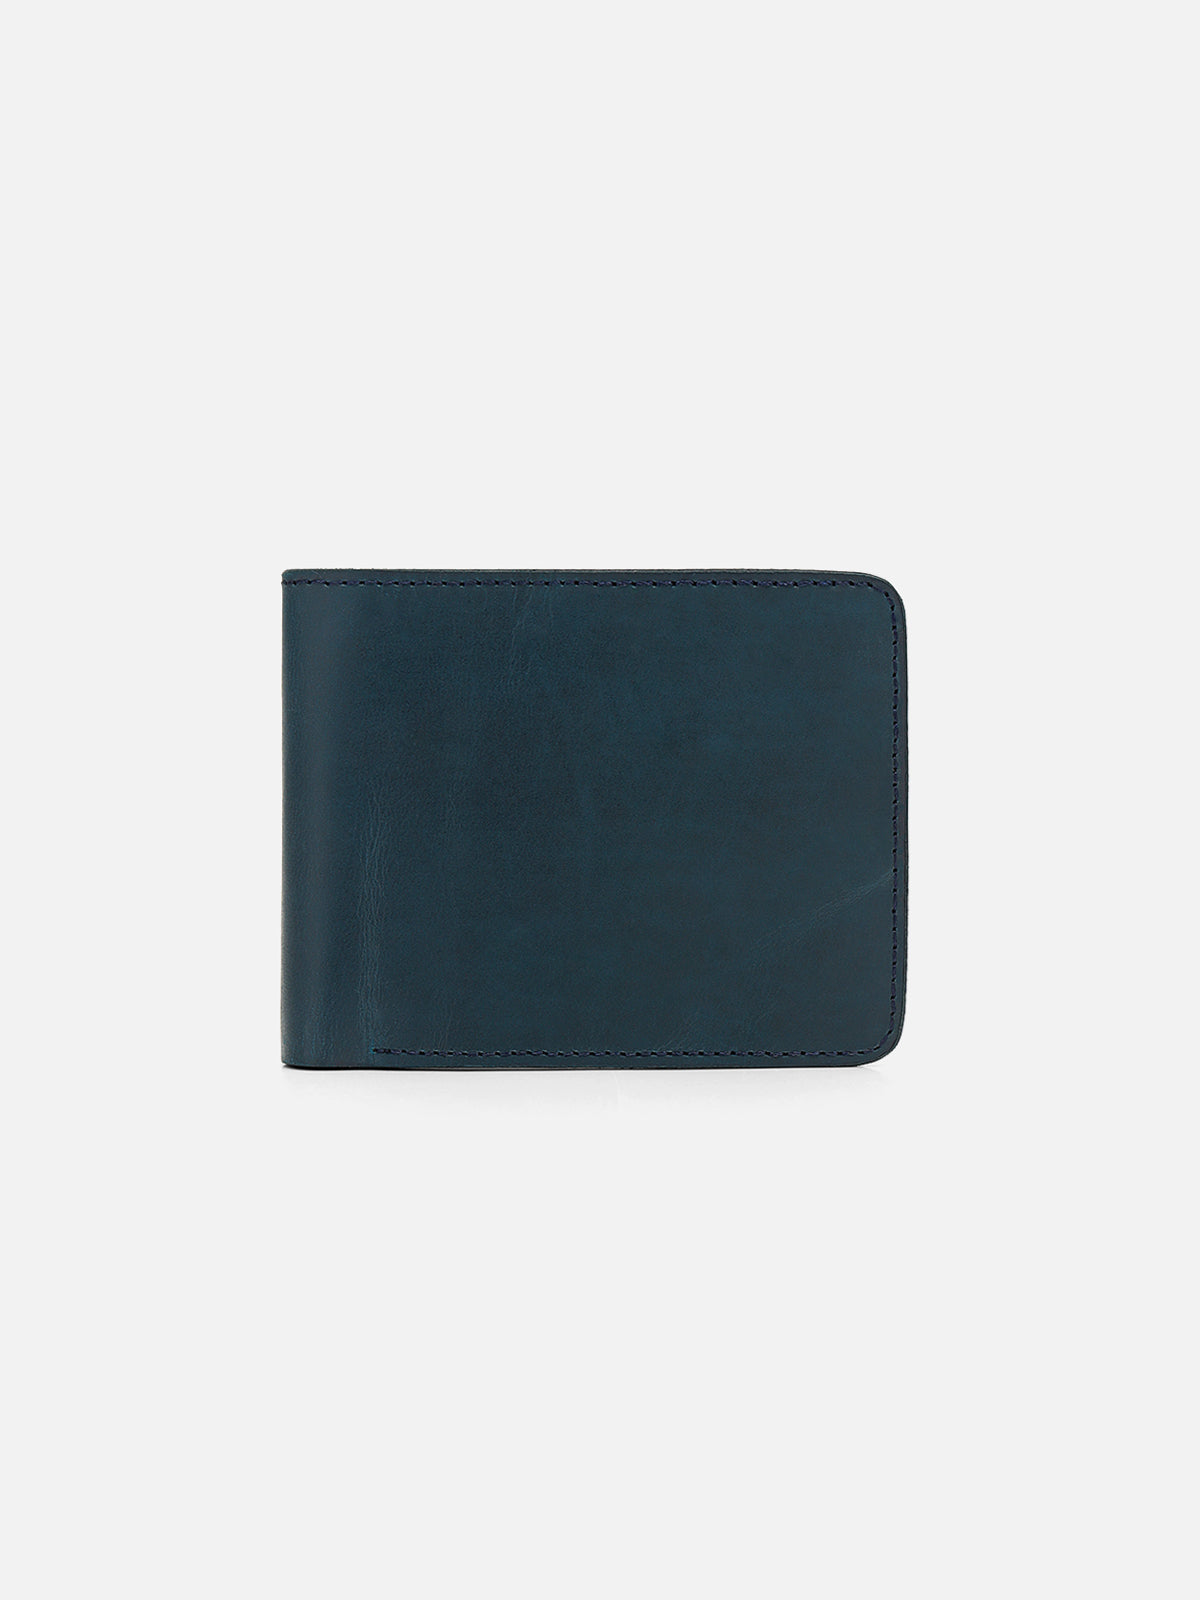 Greyish Blue Leather Wallet - FAMW23-031